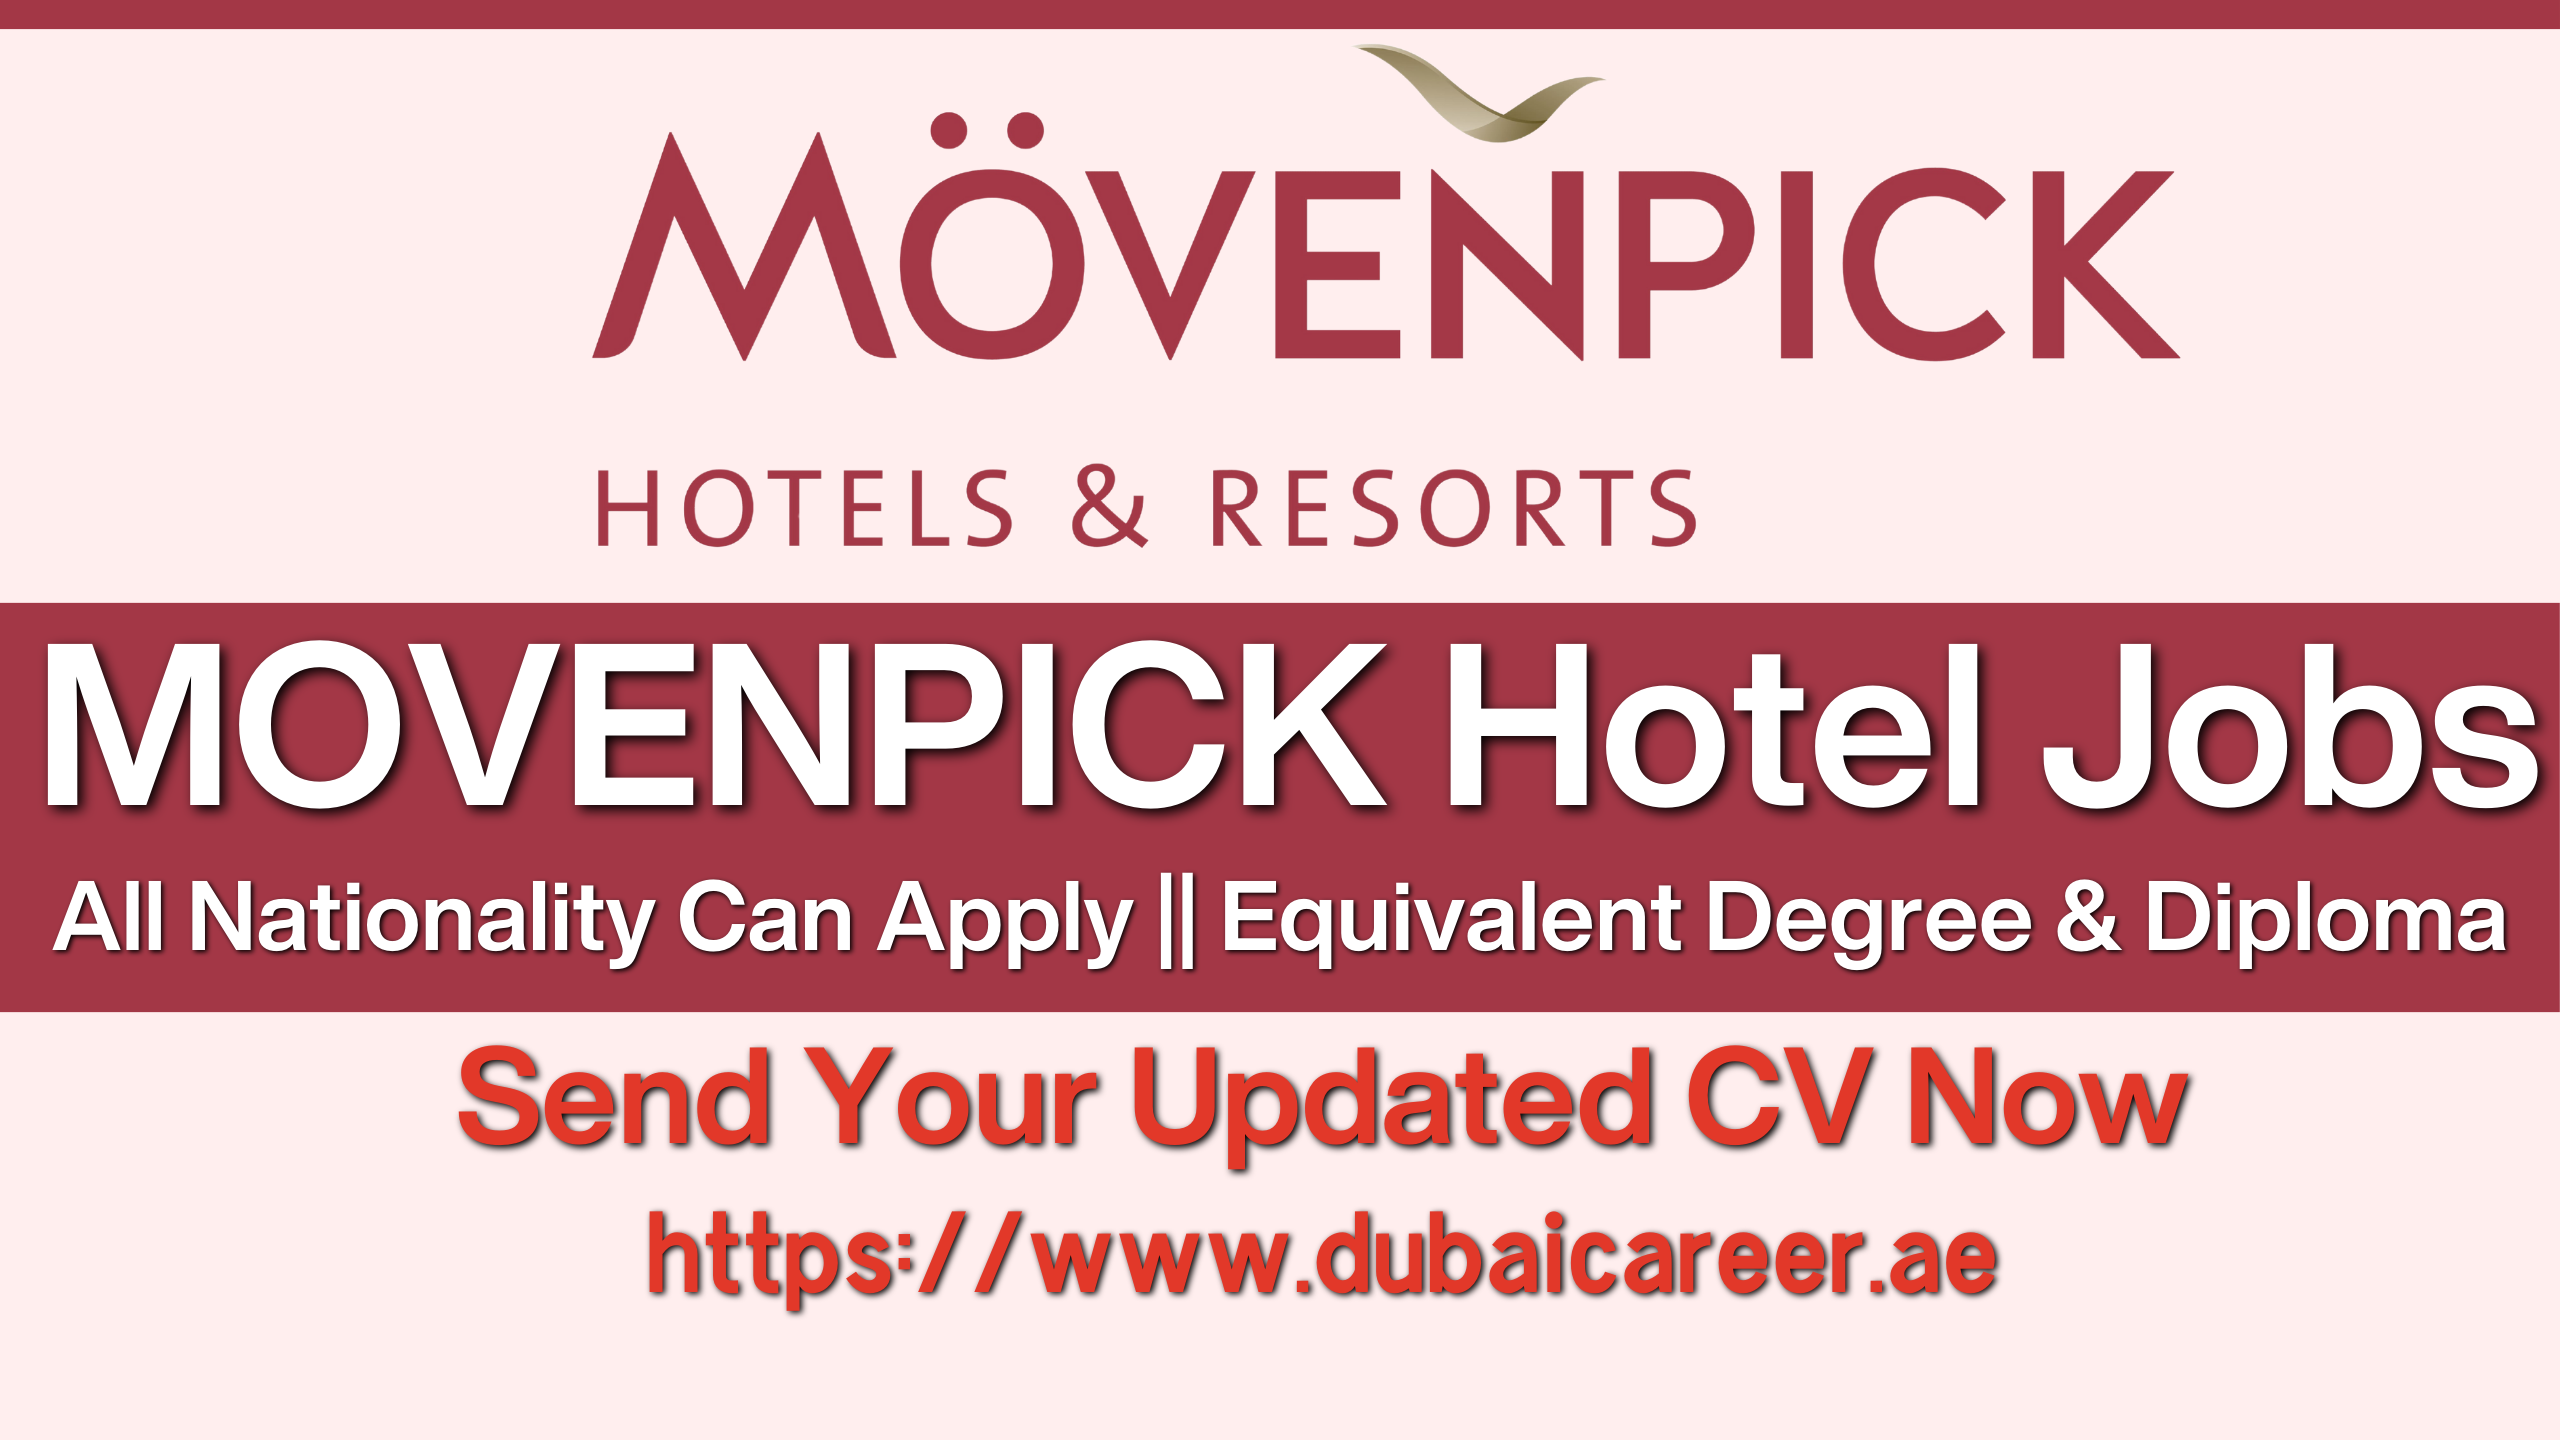 Movenpick Hotel Jobs In Dubai, Movenpick Hotel Careers In Dubai